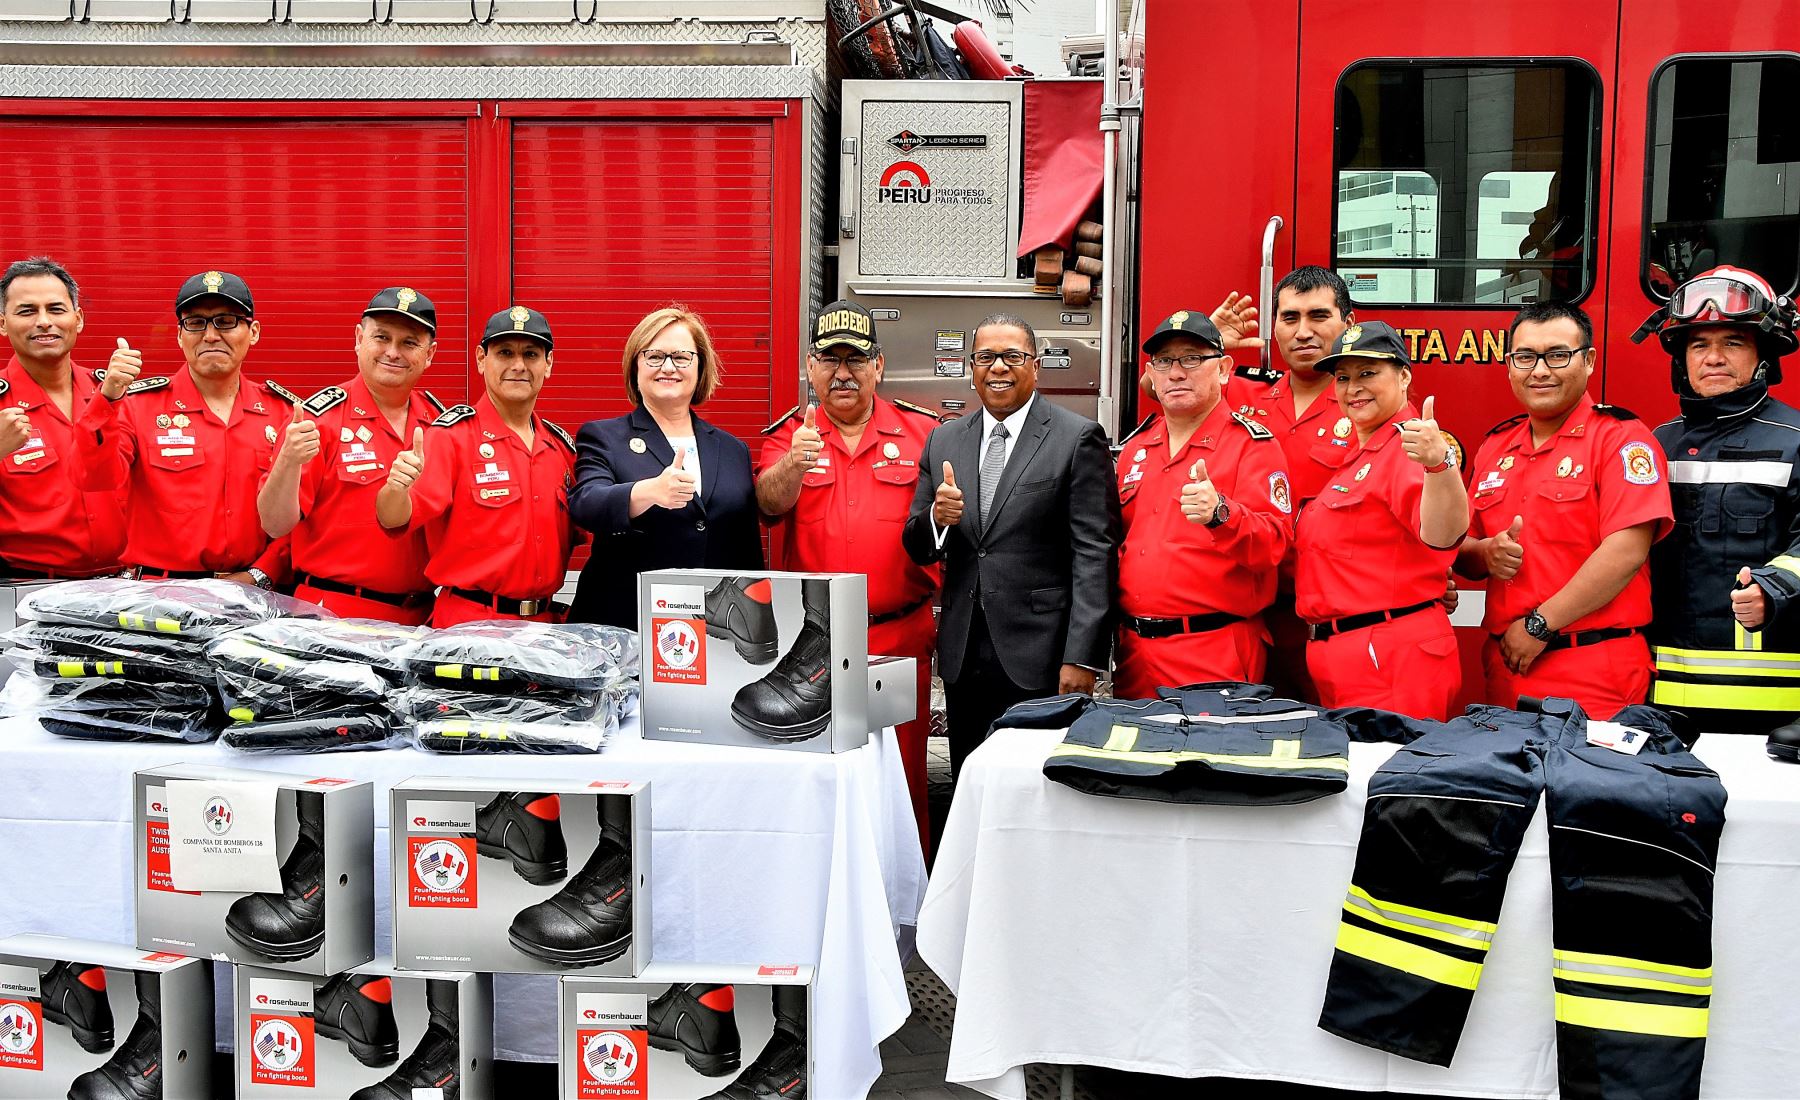 Peru firemen upgrade turnout gear with U.S. donation